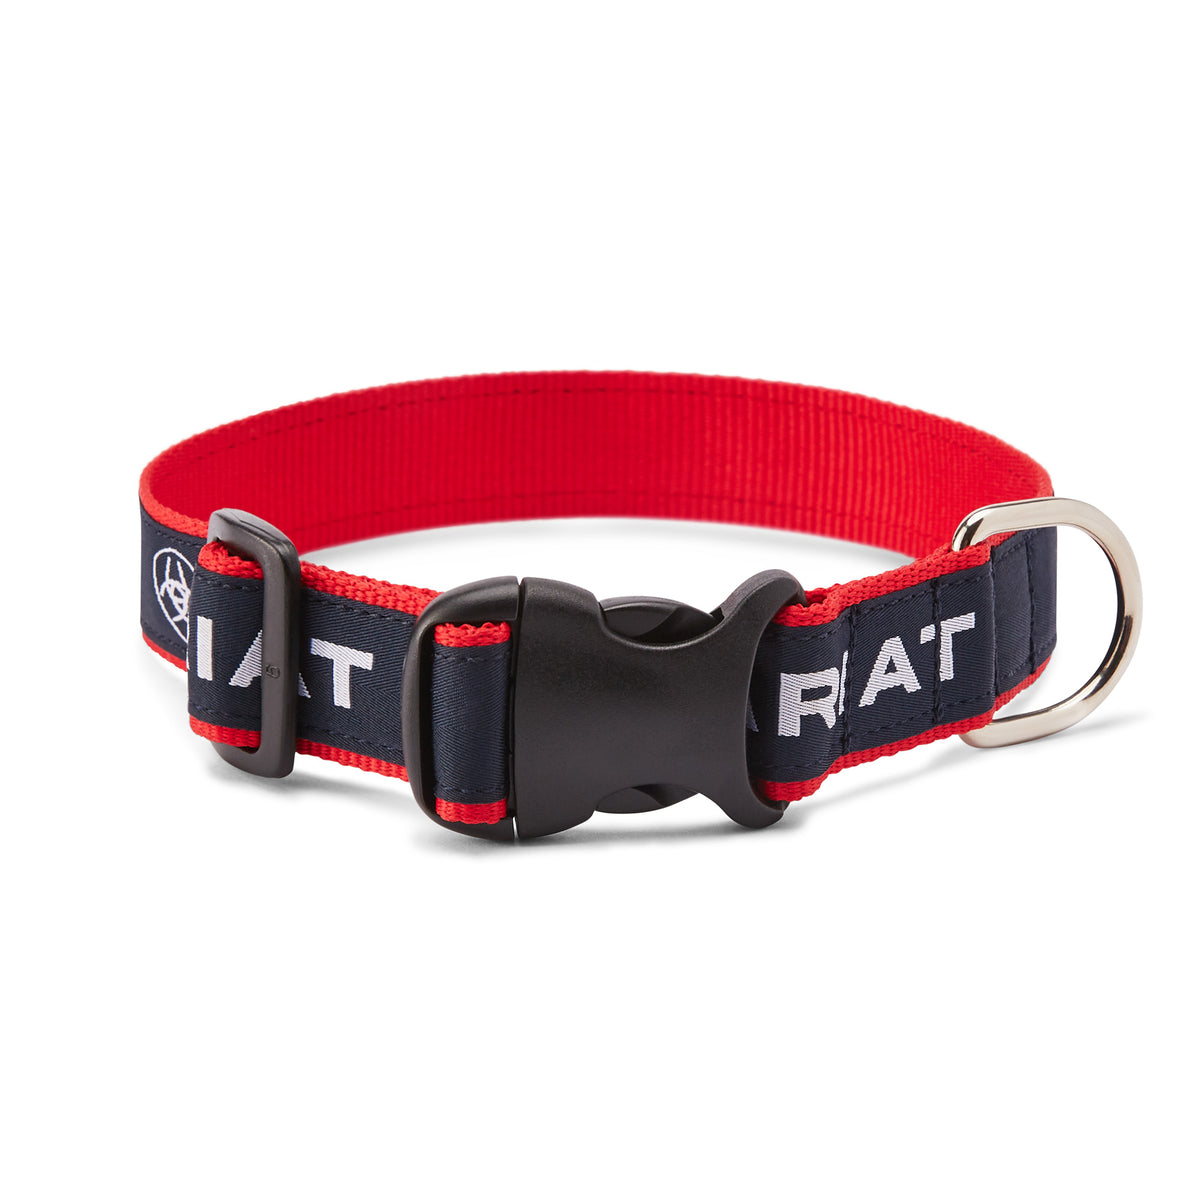 Ariat Dog Collar | Farm House Tack